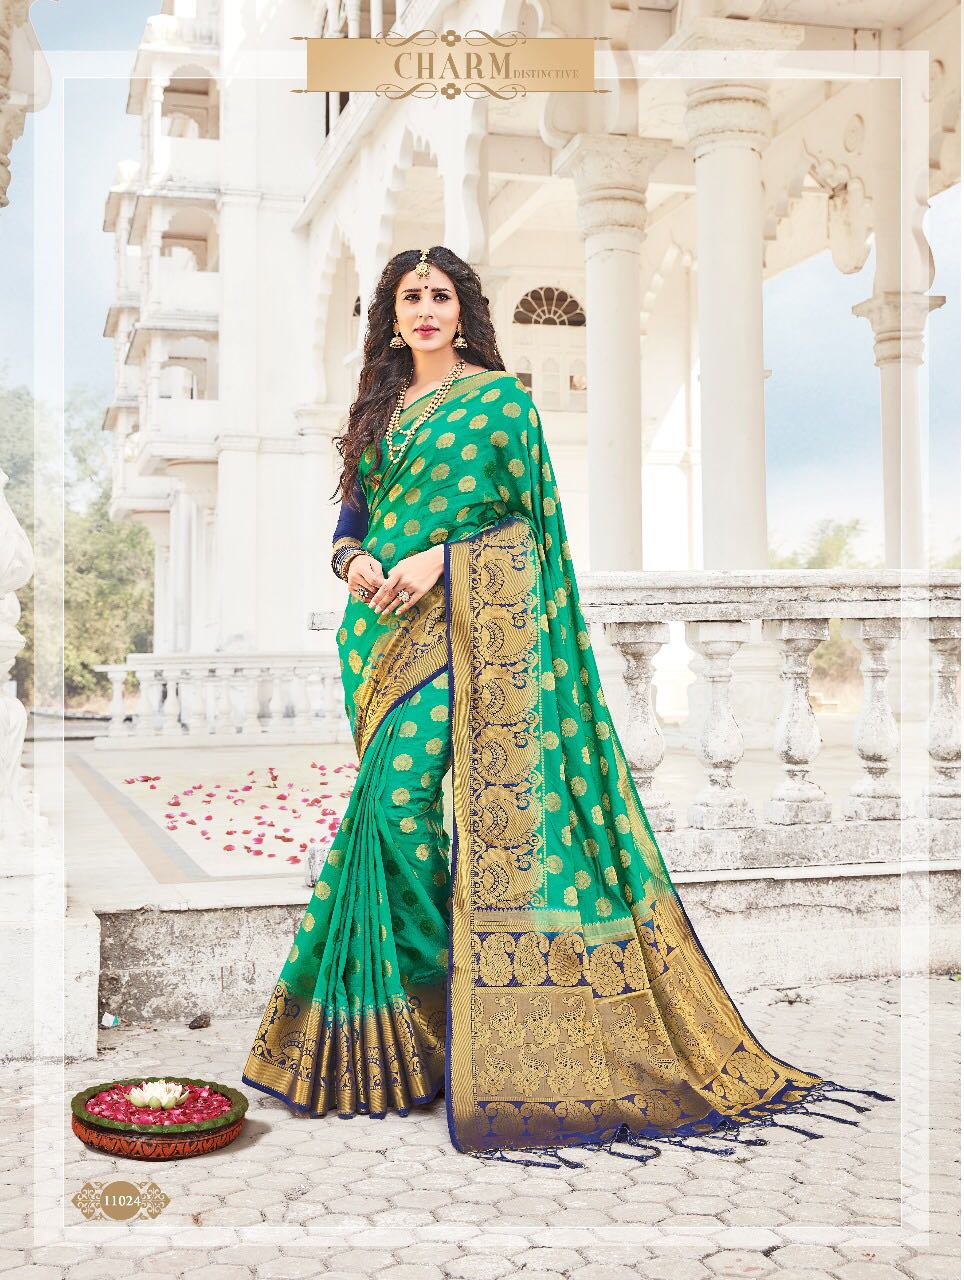 Shangrila Indian Silk 11024